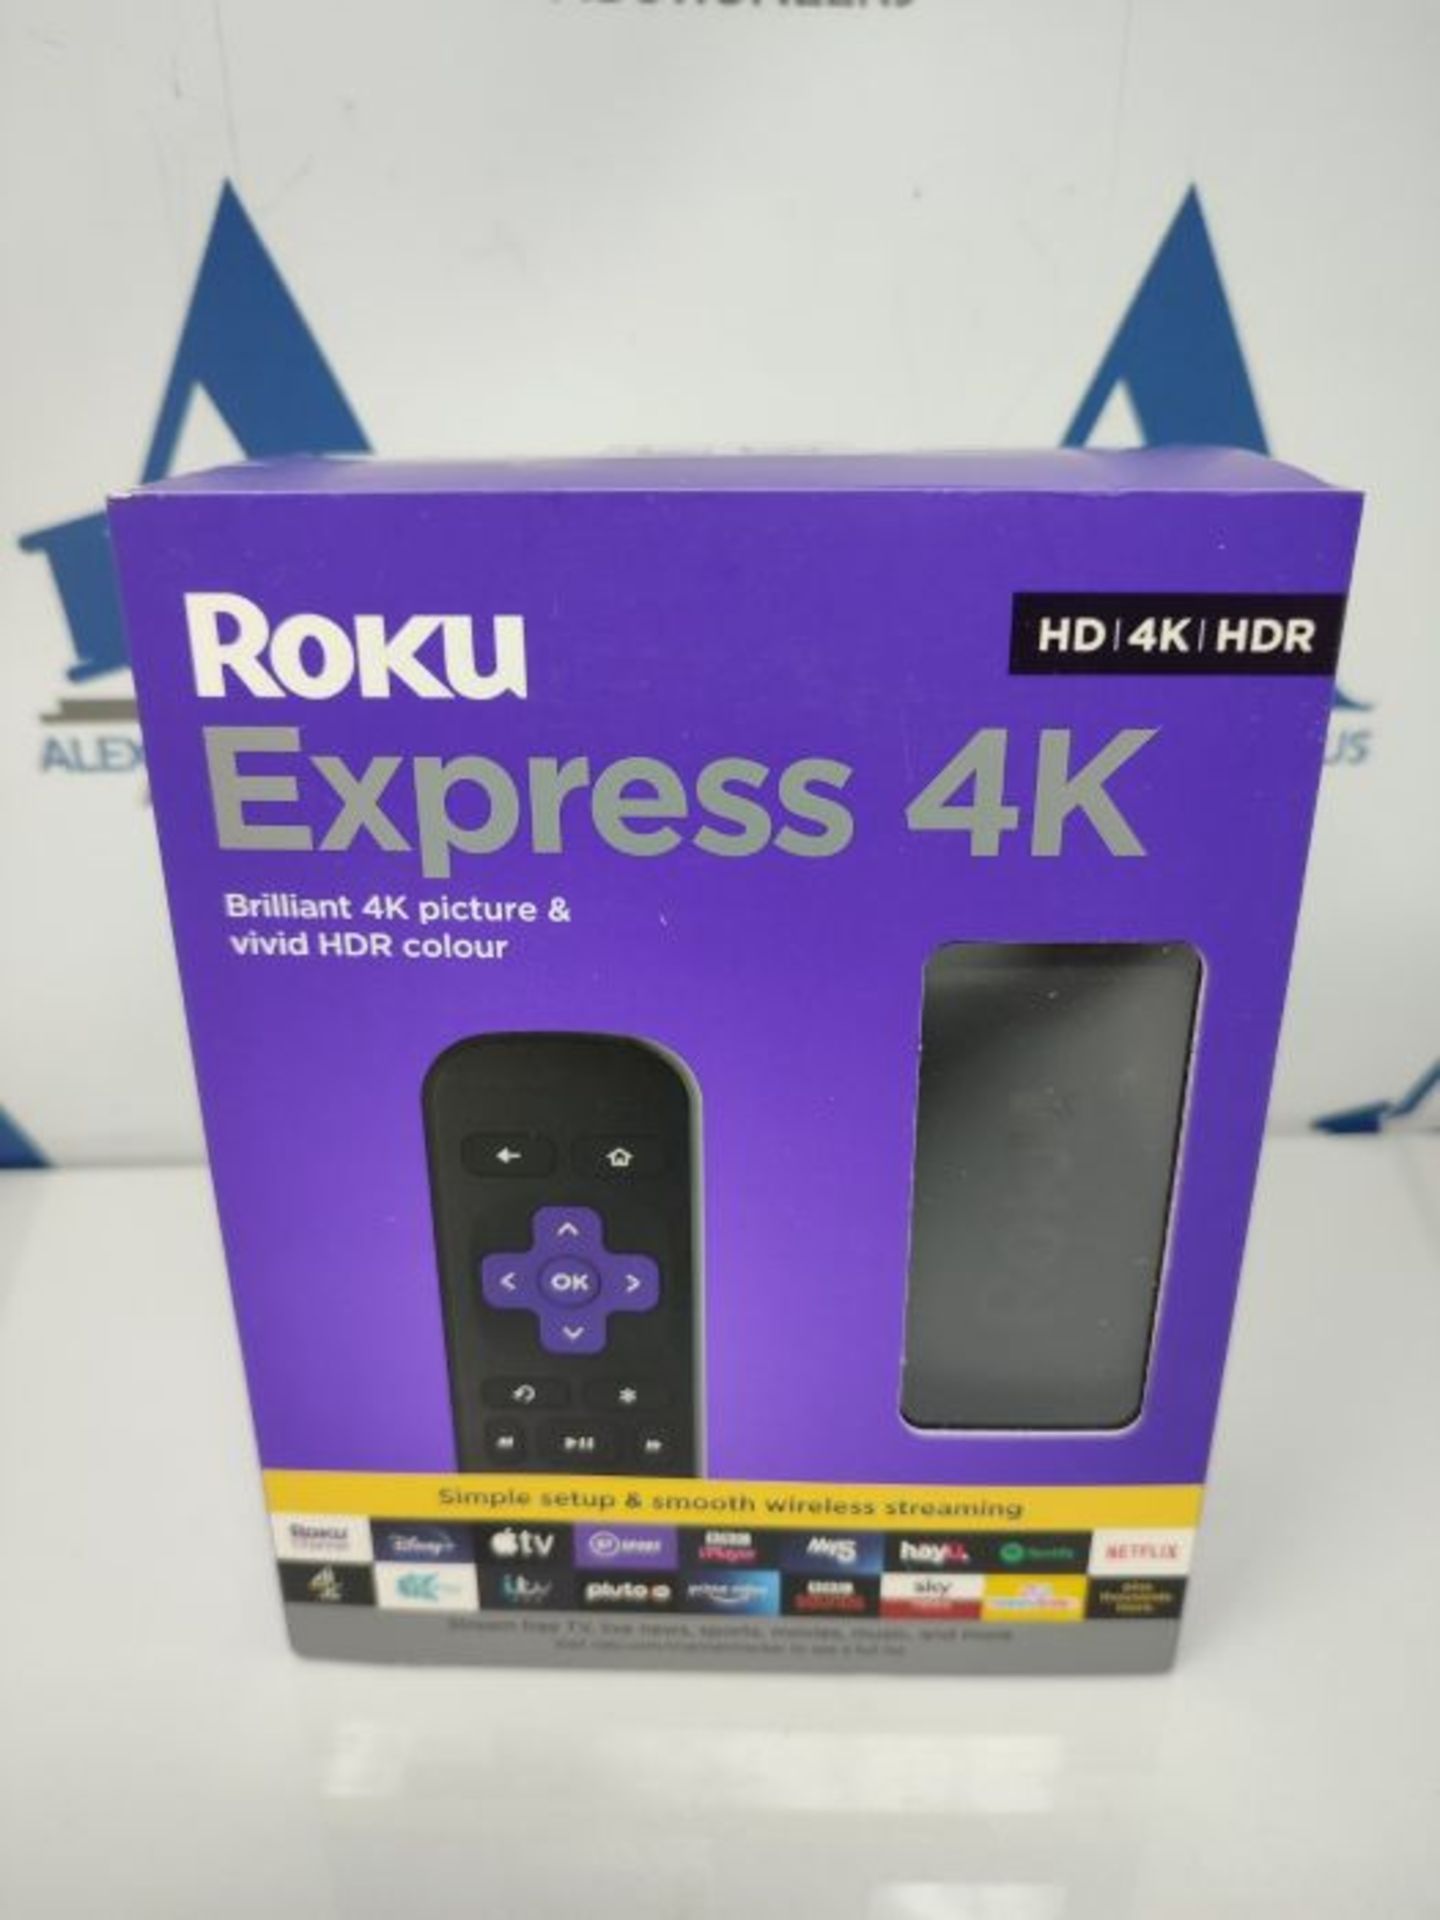 Roku Express 4K | HD/4K/HDR Streaming Media Player, Black - Image 2 of 3